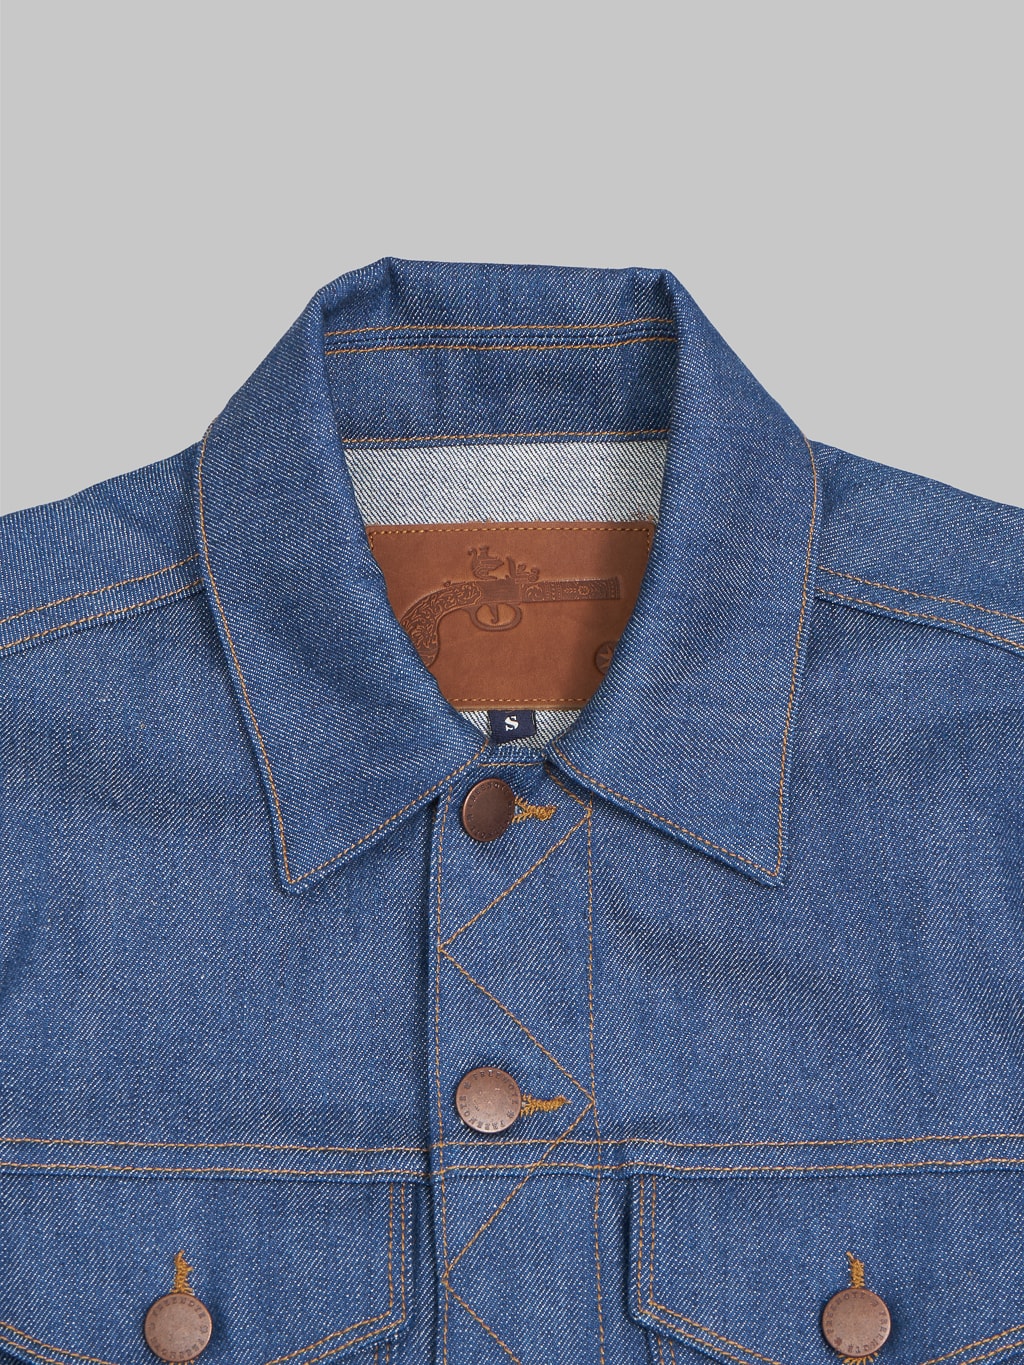 freenote cloth classic denim jacket vintage blue denim collar details